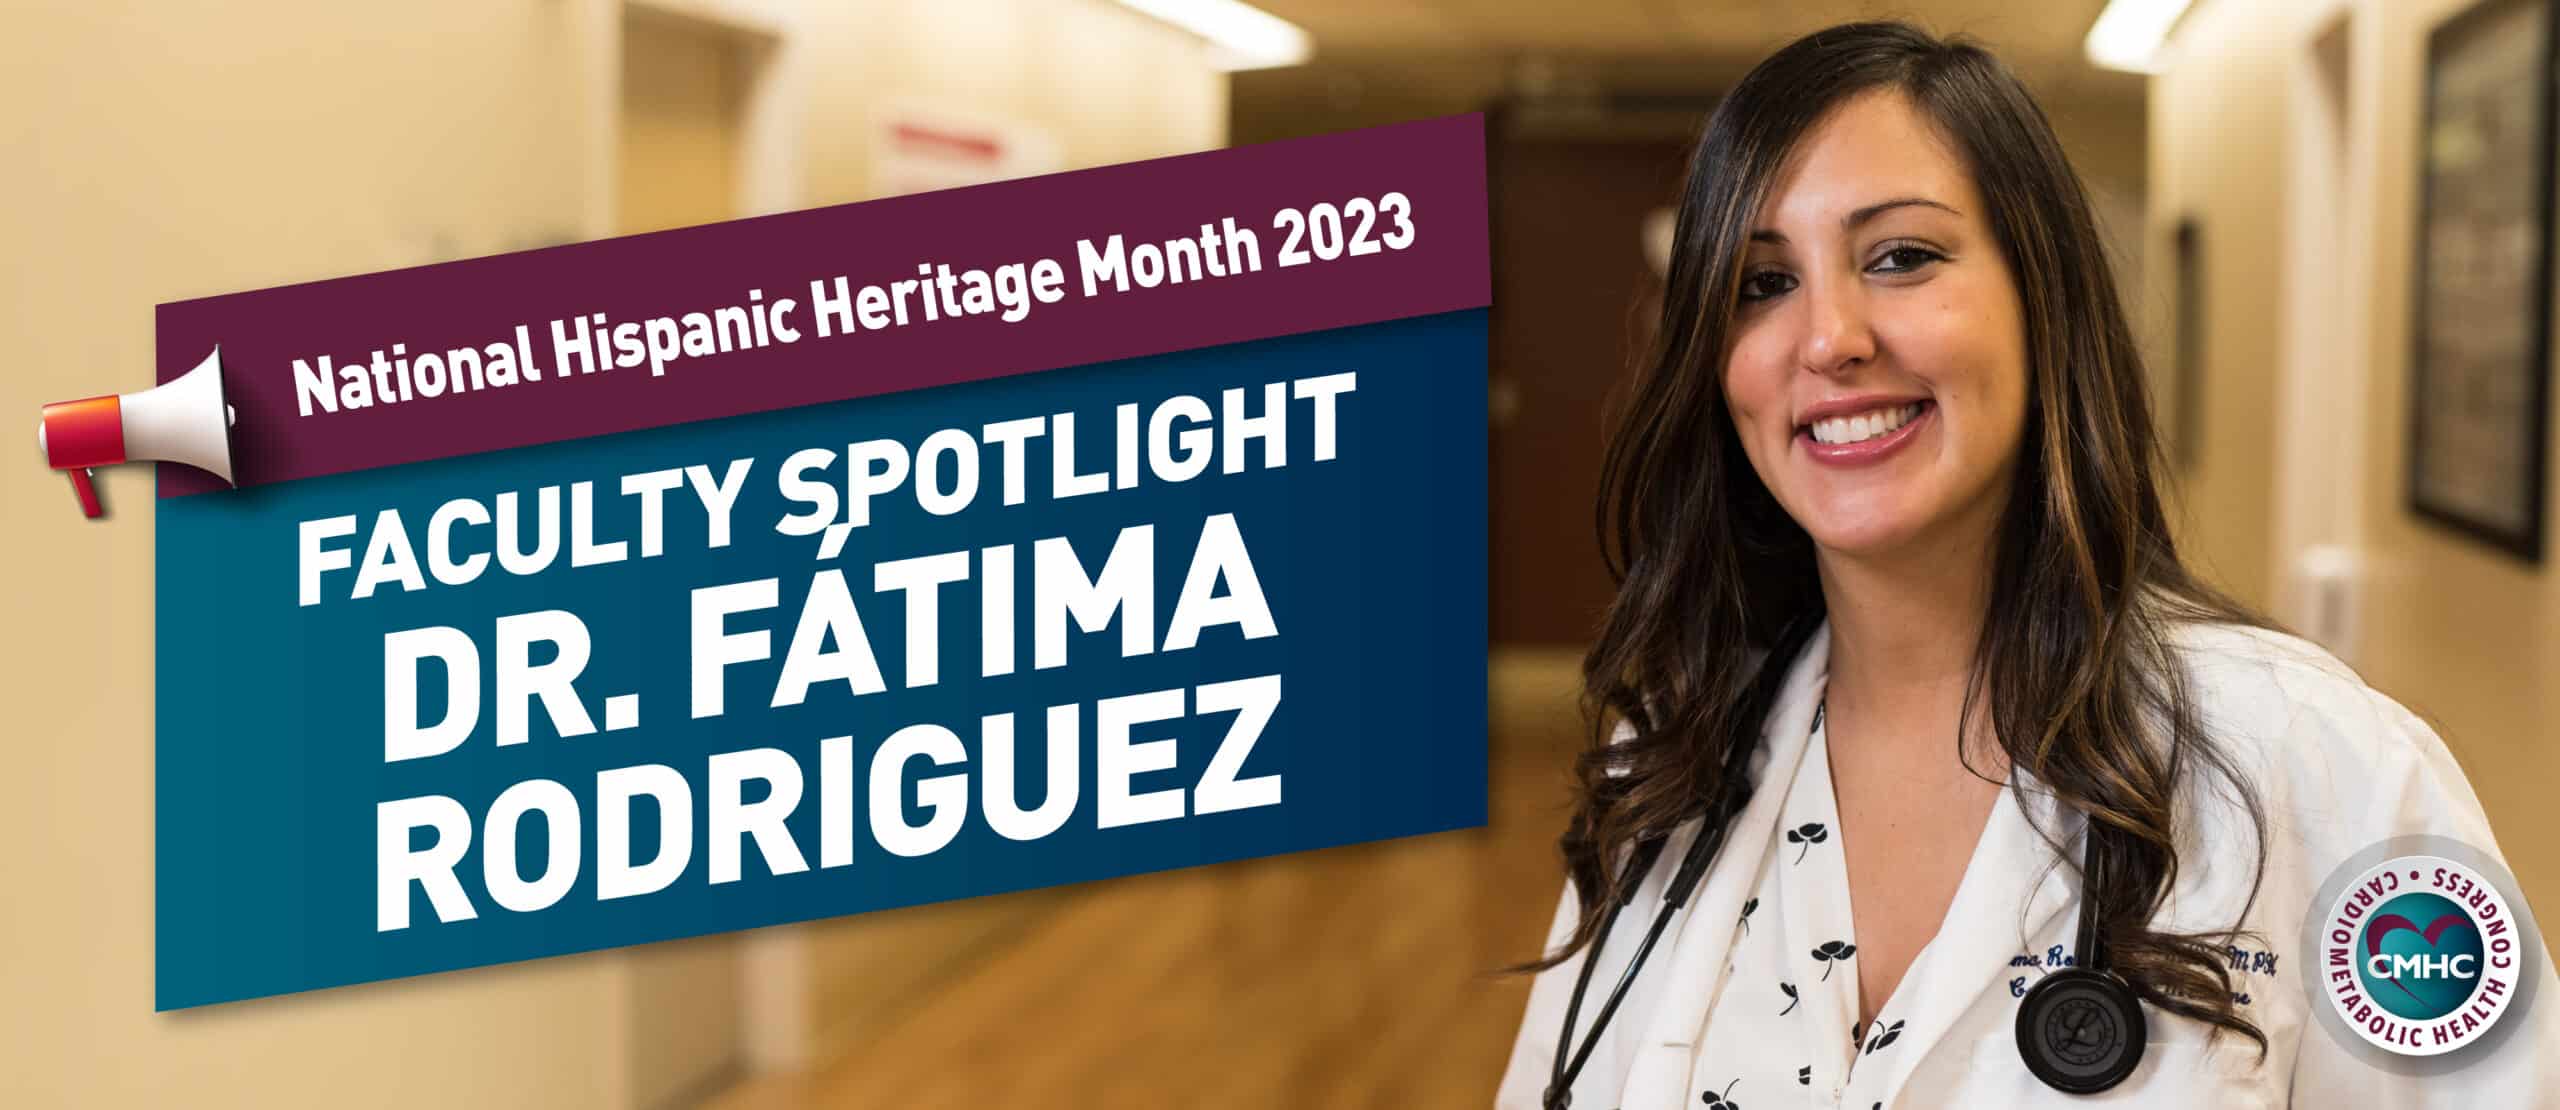 National Hispanic Heritage Month 2023 Faculty Spotlight: Dr. Fatima Rodriguez